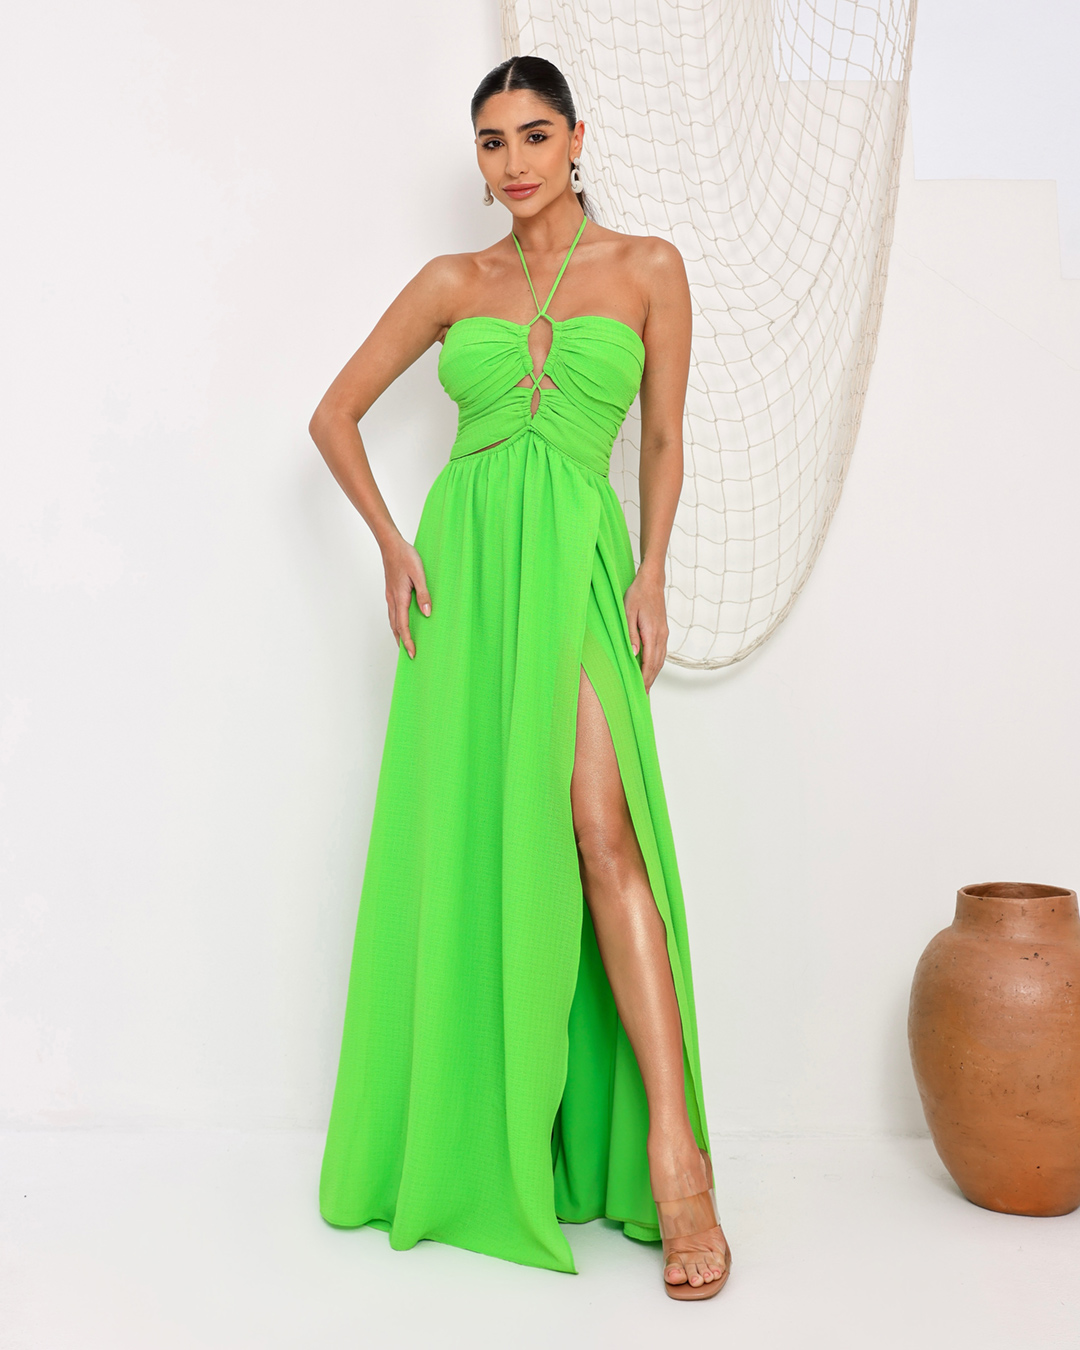 Dot Clothing - Vestido Dot Clothing Tiras Verde - 2089VERDE